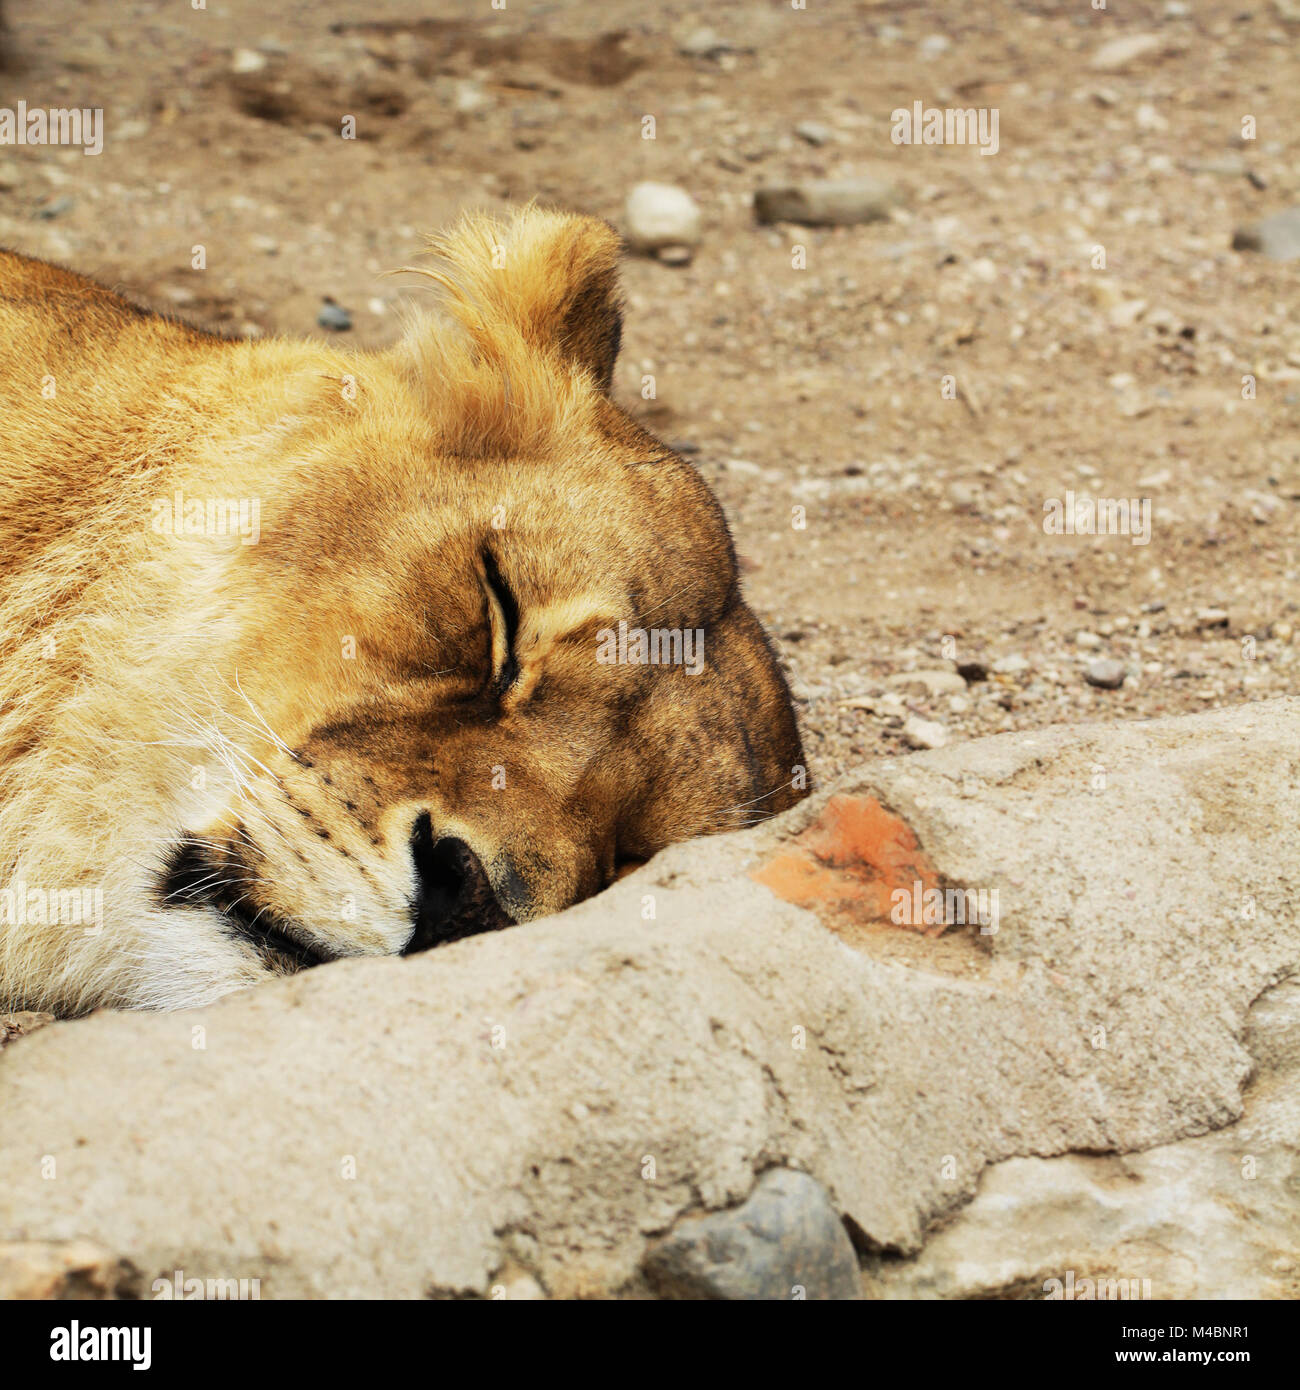 Lioness close up animal photo Stock Photo